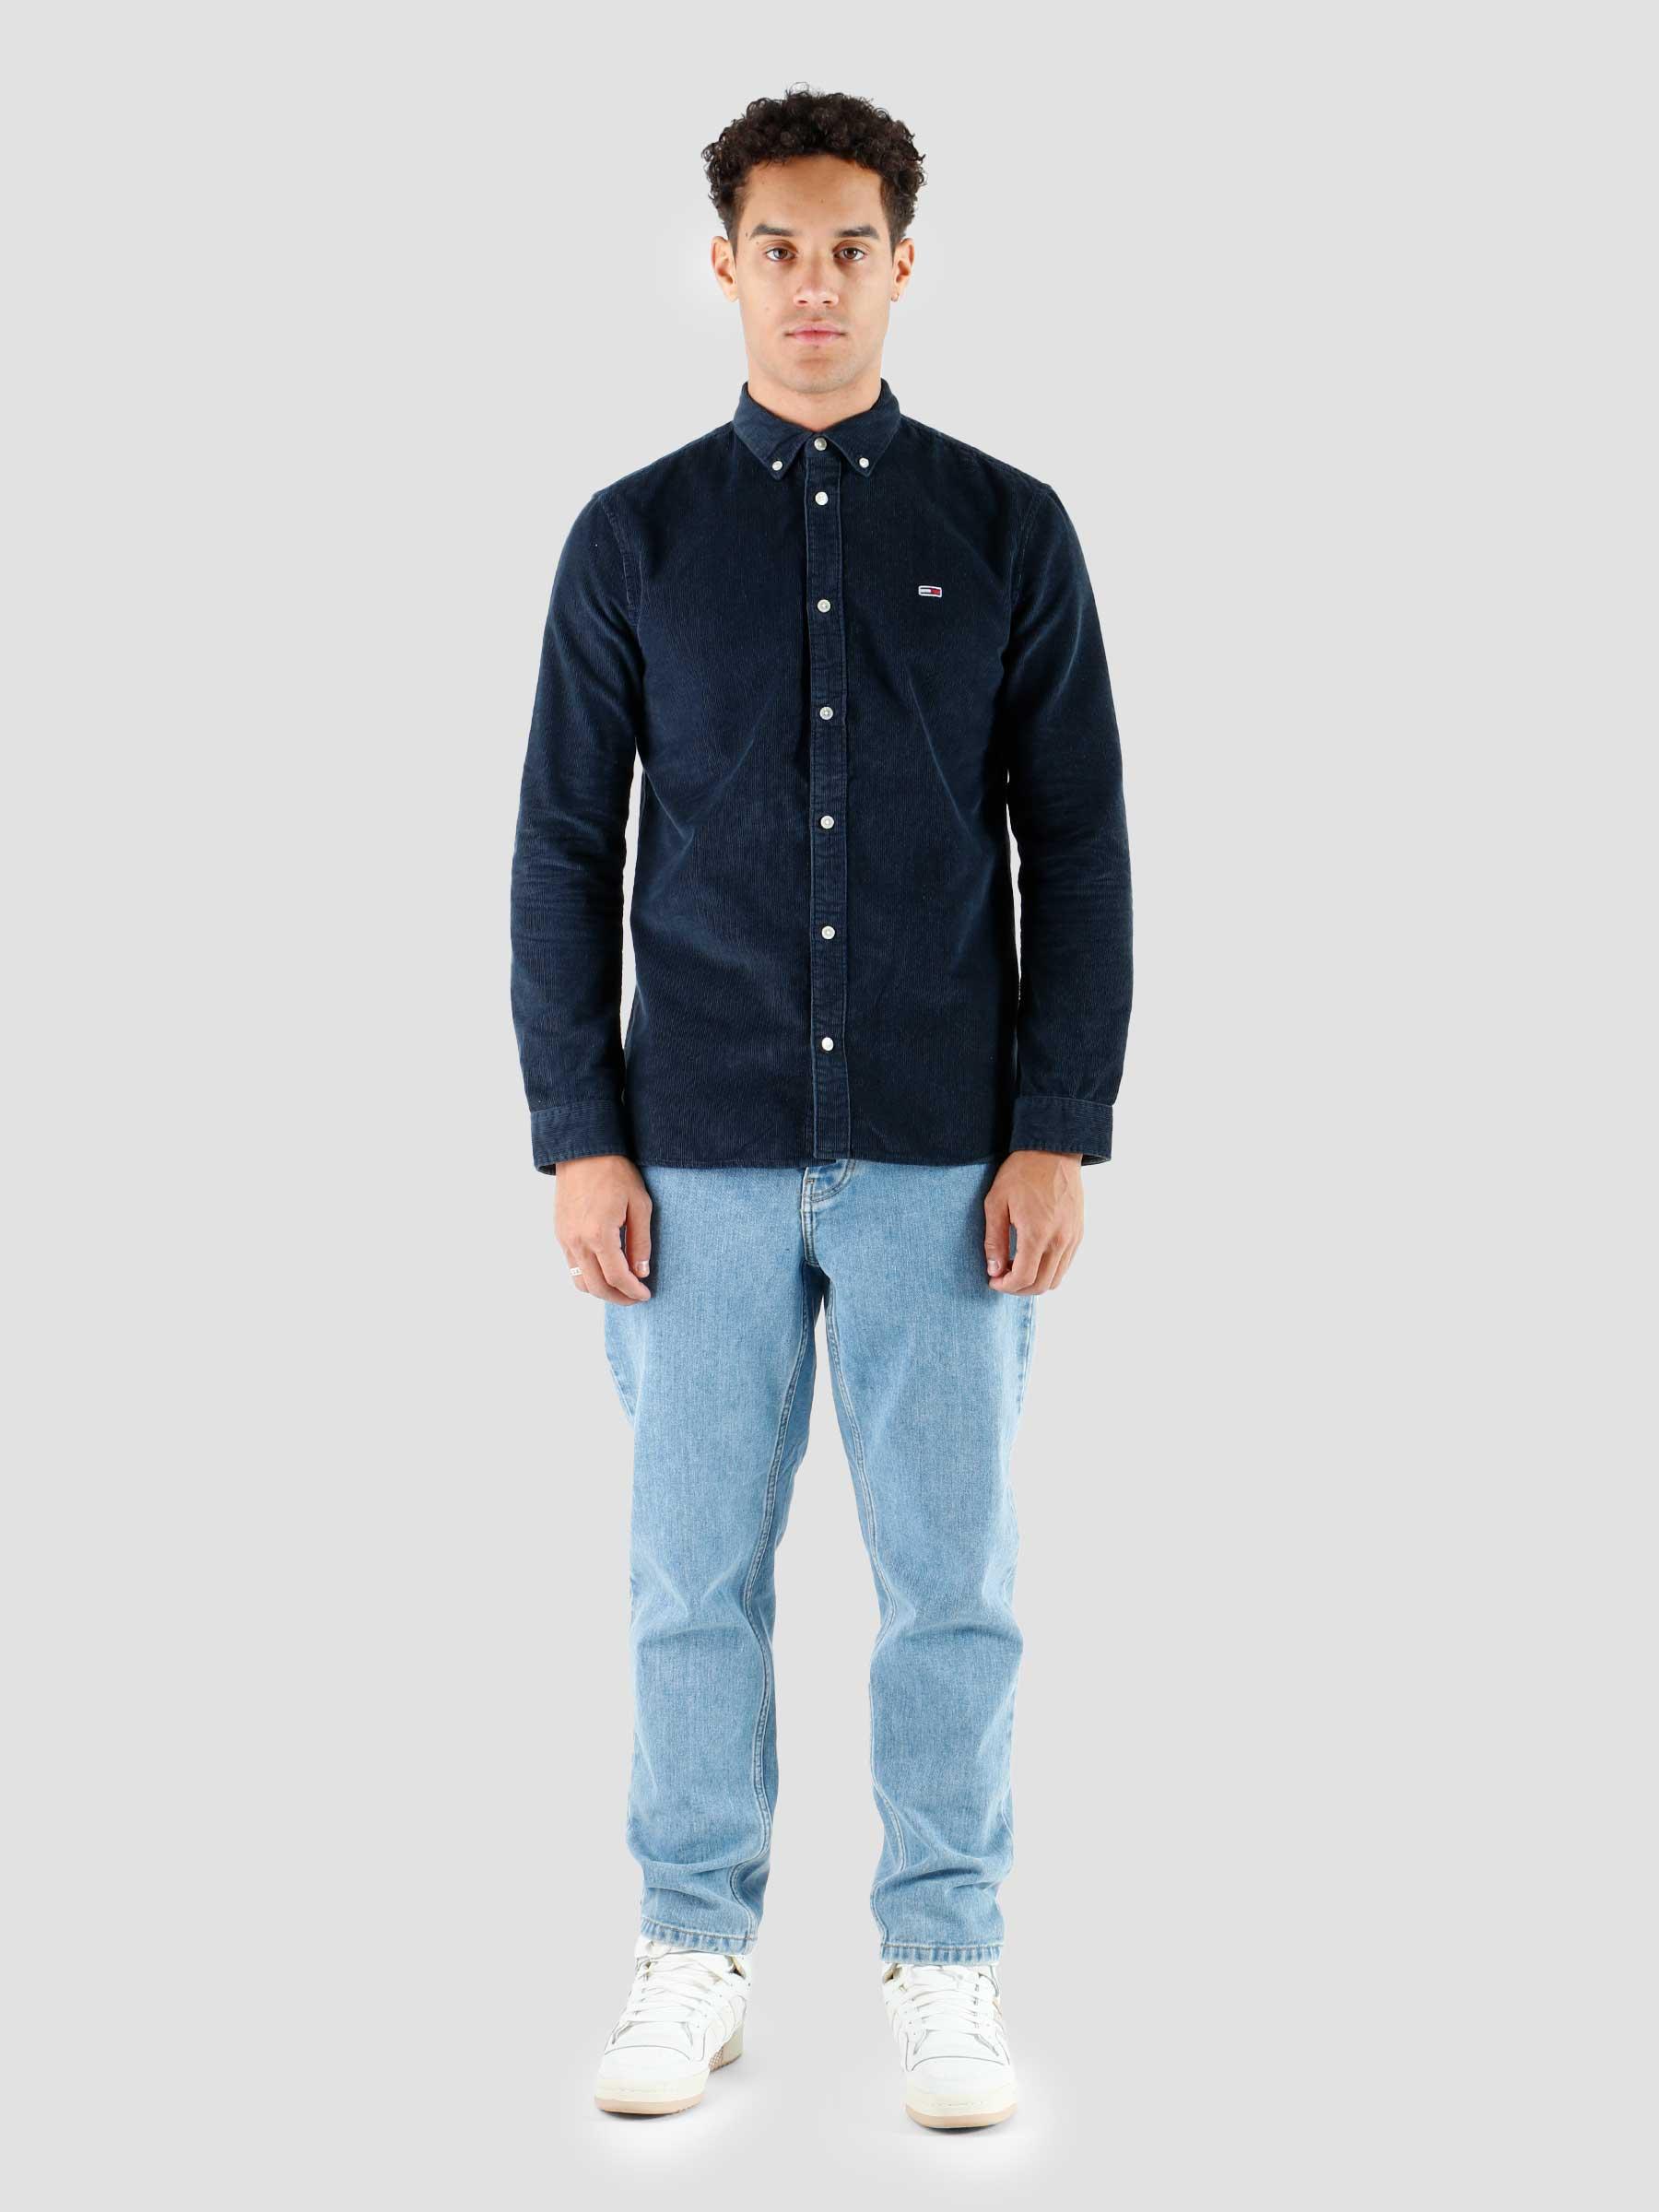 - Cord Jeans Shirt Navy Tommy Twilight Solid Freshcotton TJM